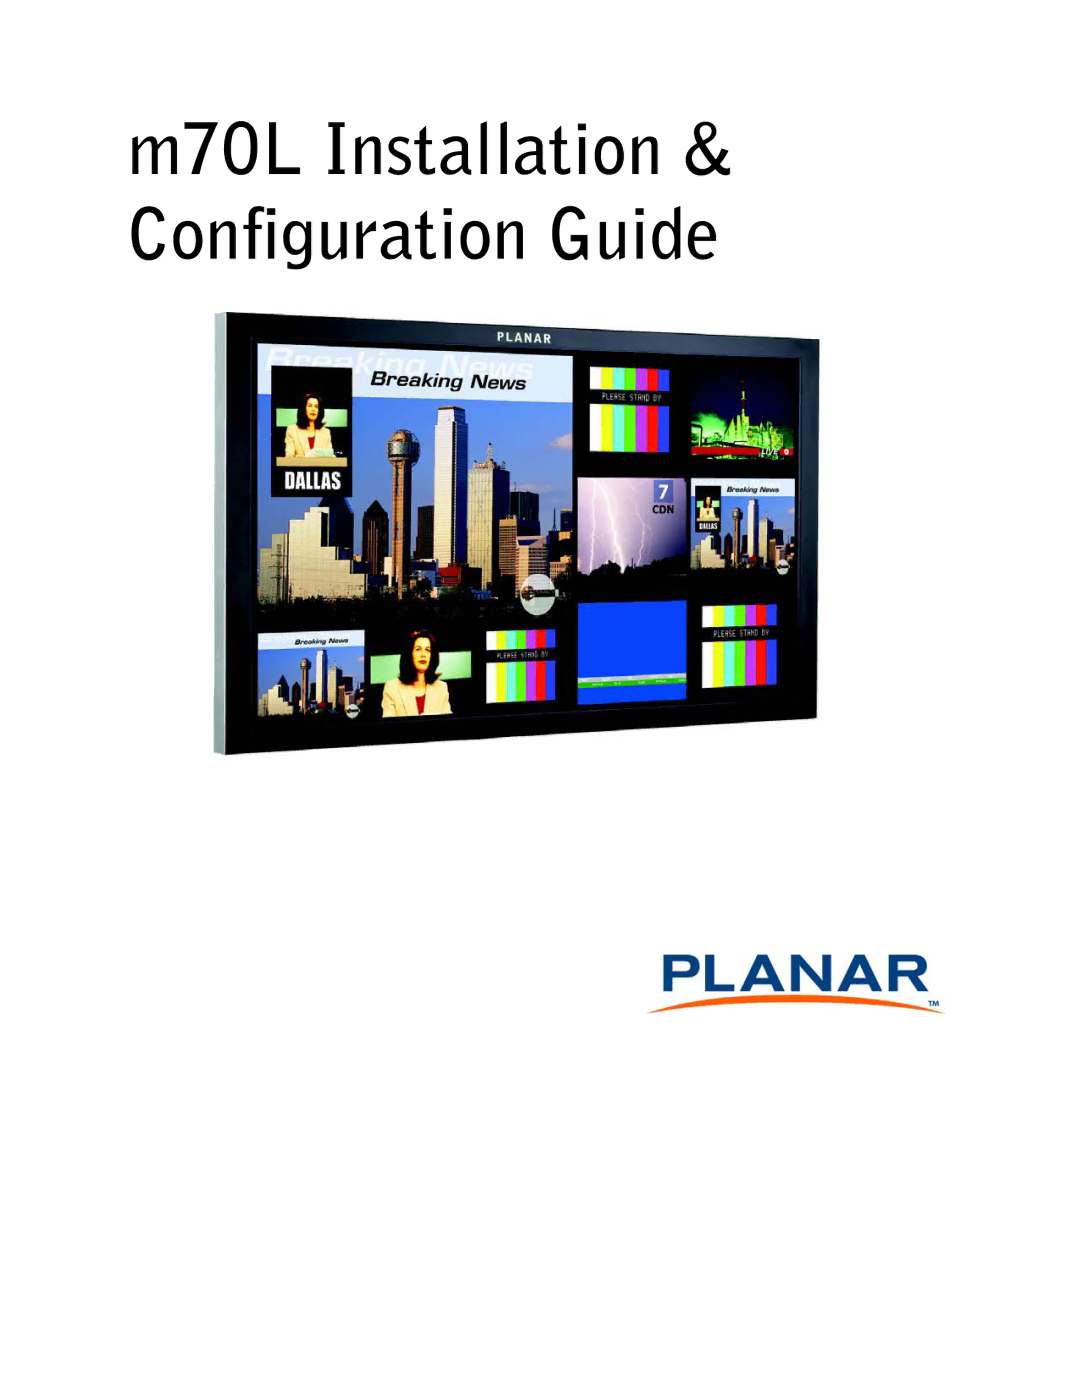 Planar manual M70L Installation & Configuration Guide 